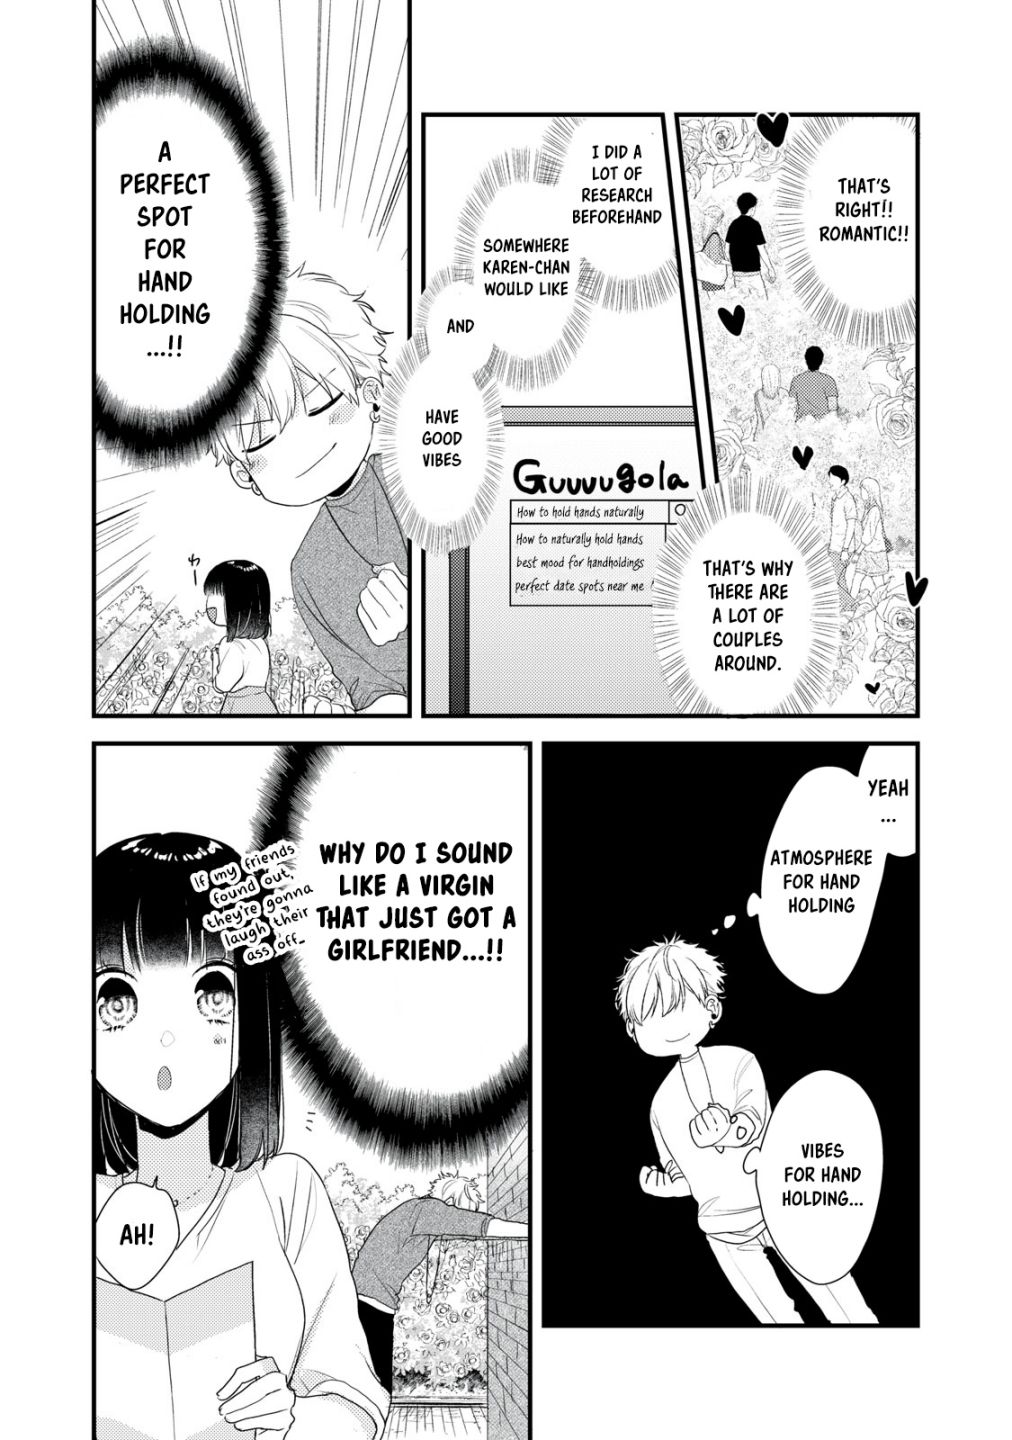 Lovesick-kun can’t approach - chapter 2 - #6